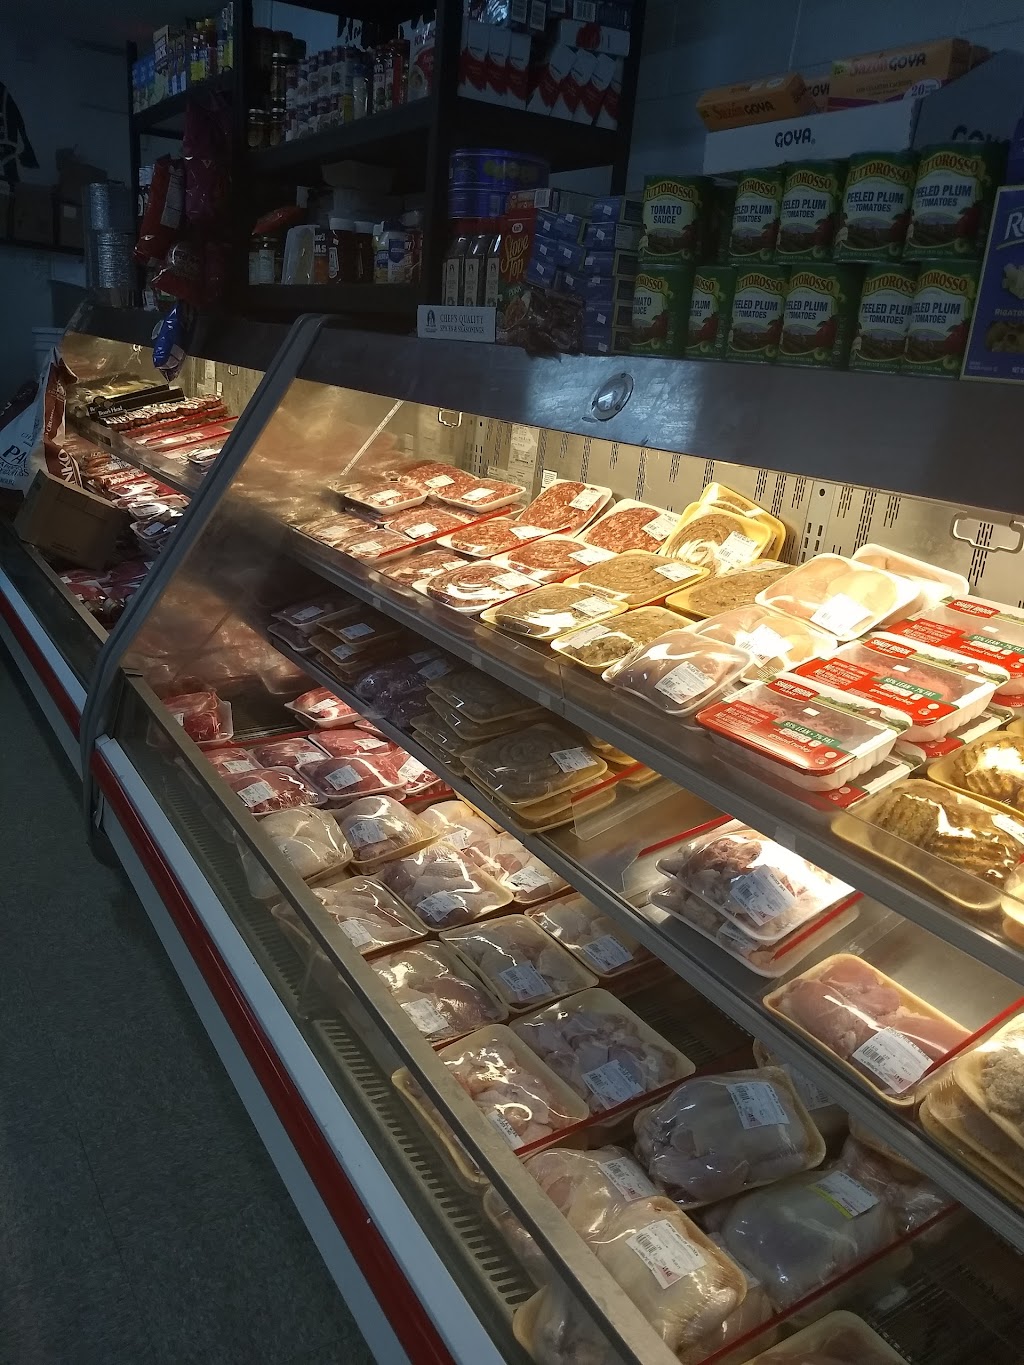 Mercedes Meat Market | 376 Neighborhood Rd, Mastic Beach, NY 11951 | Phone: (631) 772-6330